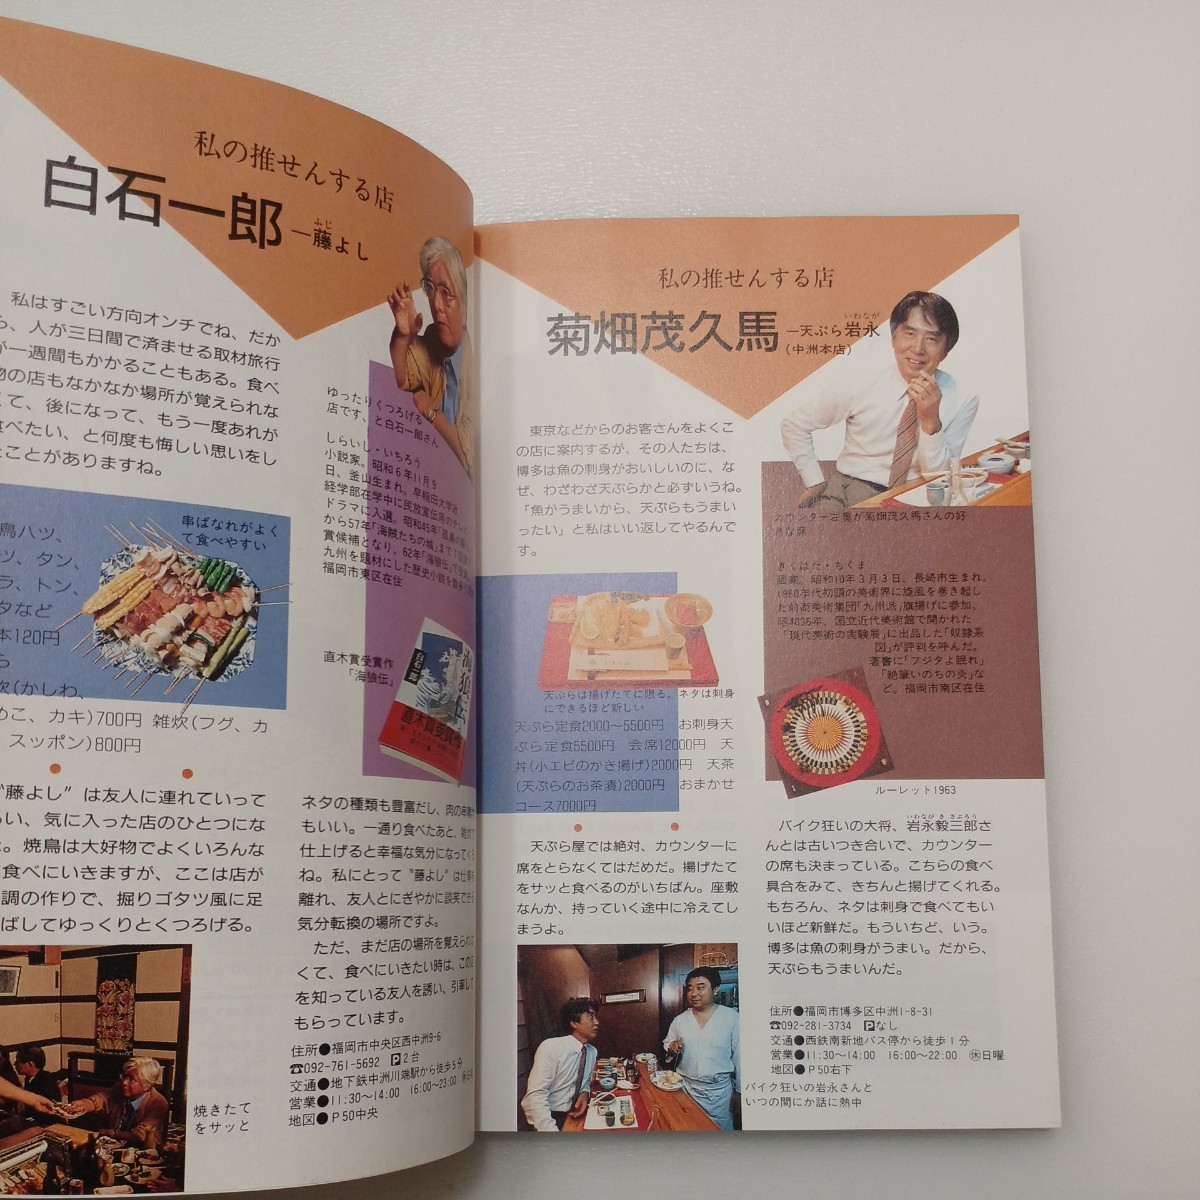 zaa-547♪味の店博多ガイド (JTBのポケットガイド65) JTBパブリッシング (1992/3/1)_画像6